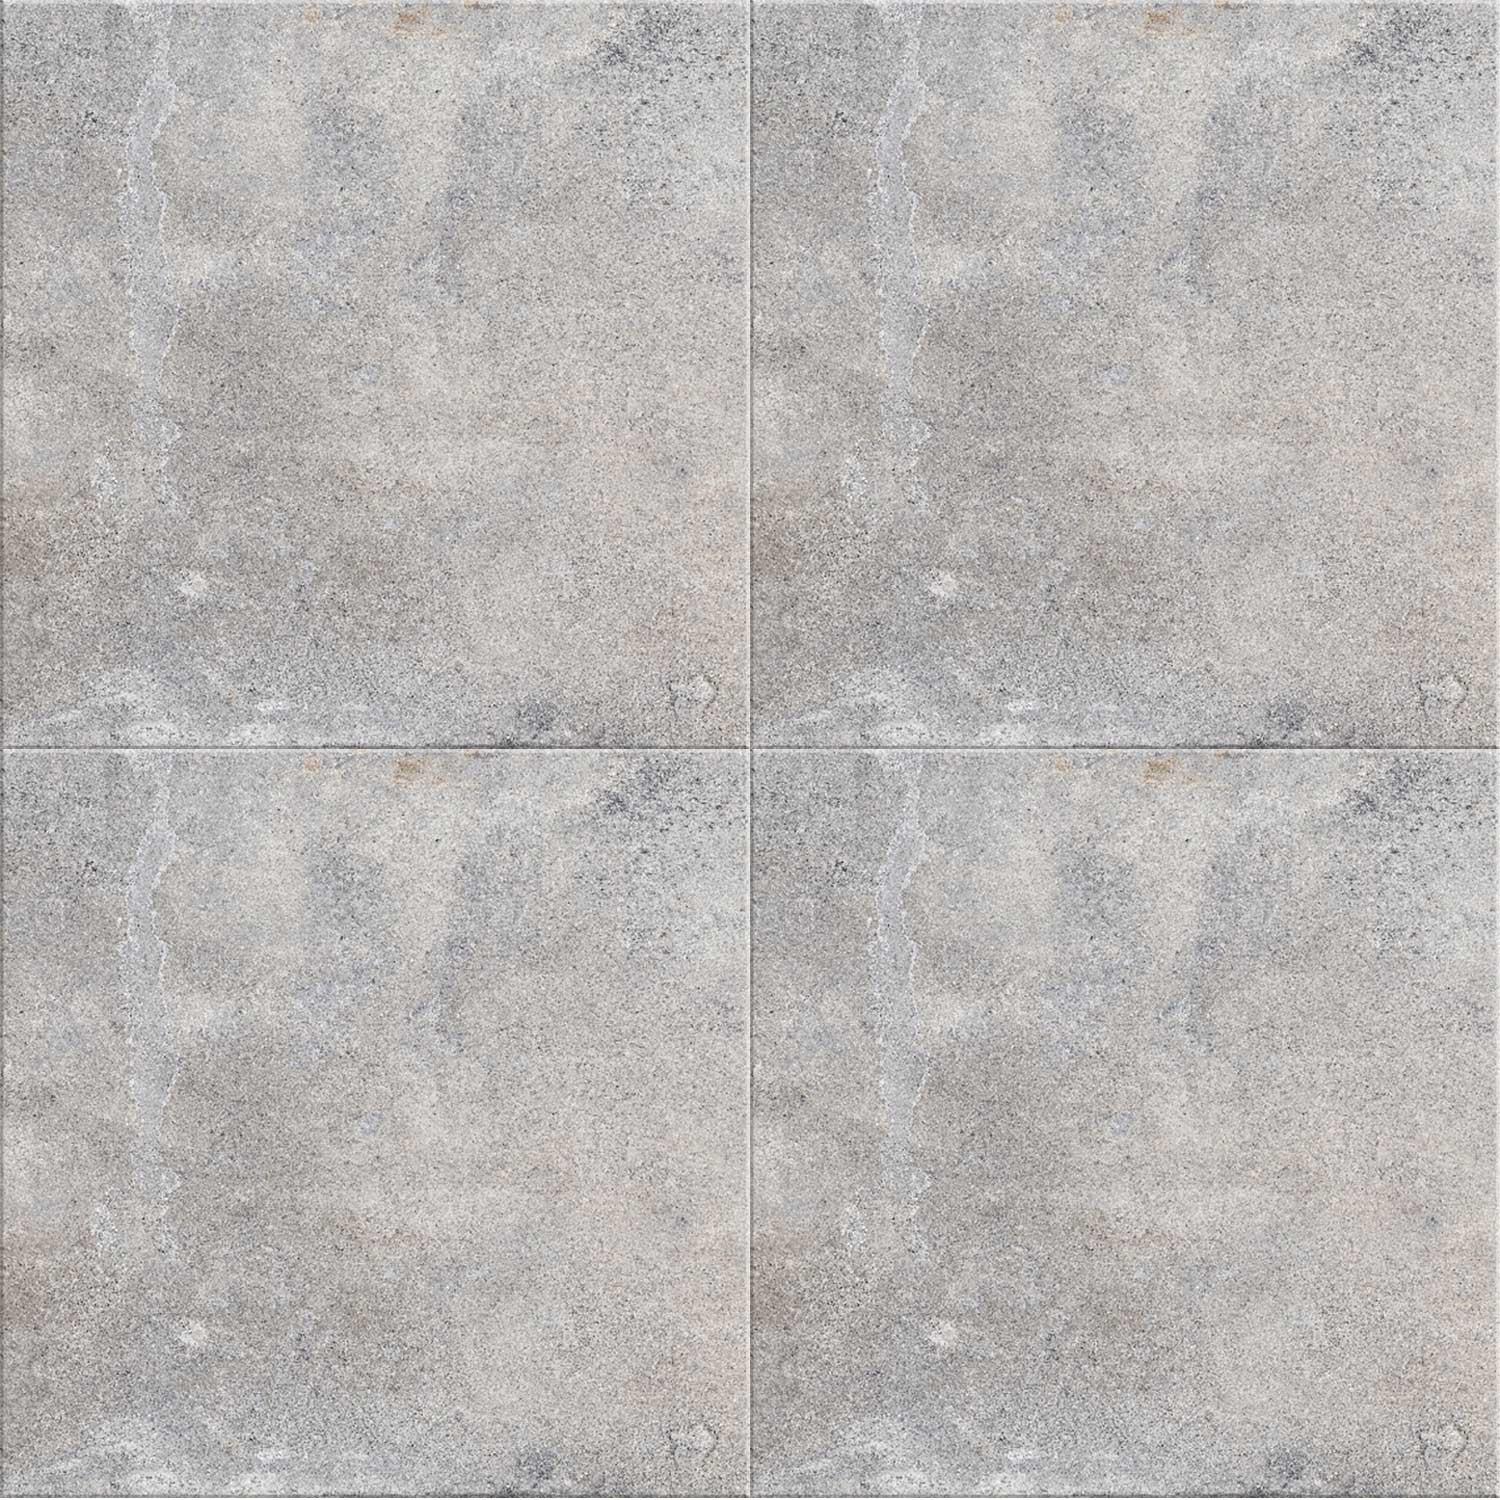 Geostone Grey Porcelain Floor Tile Large Square R10 595 x 595mm